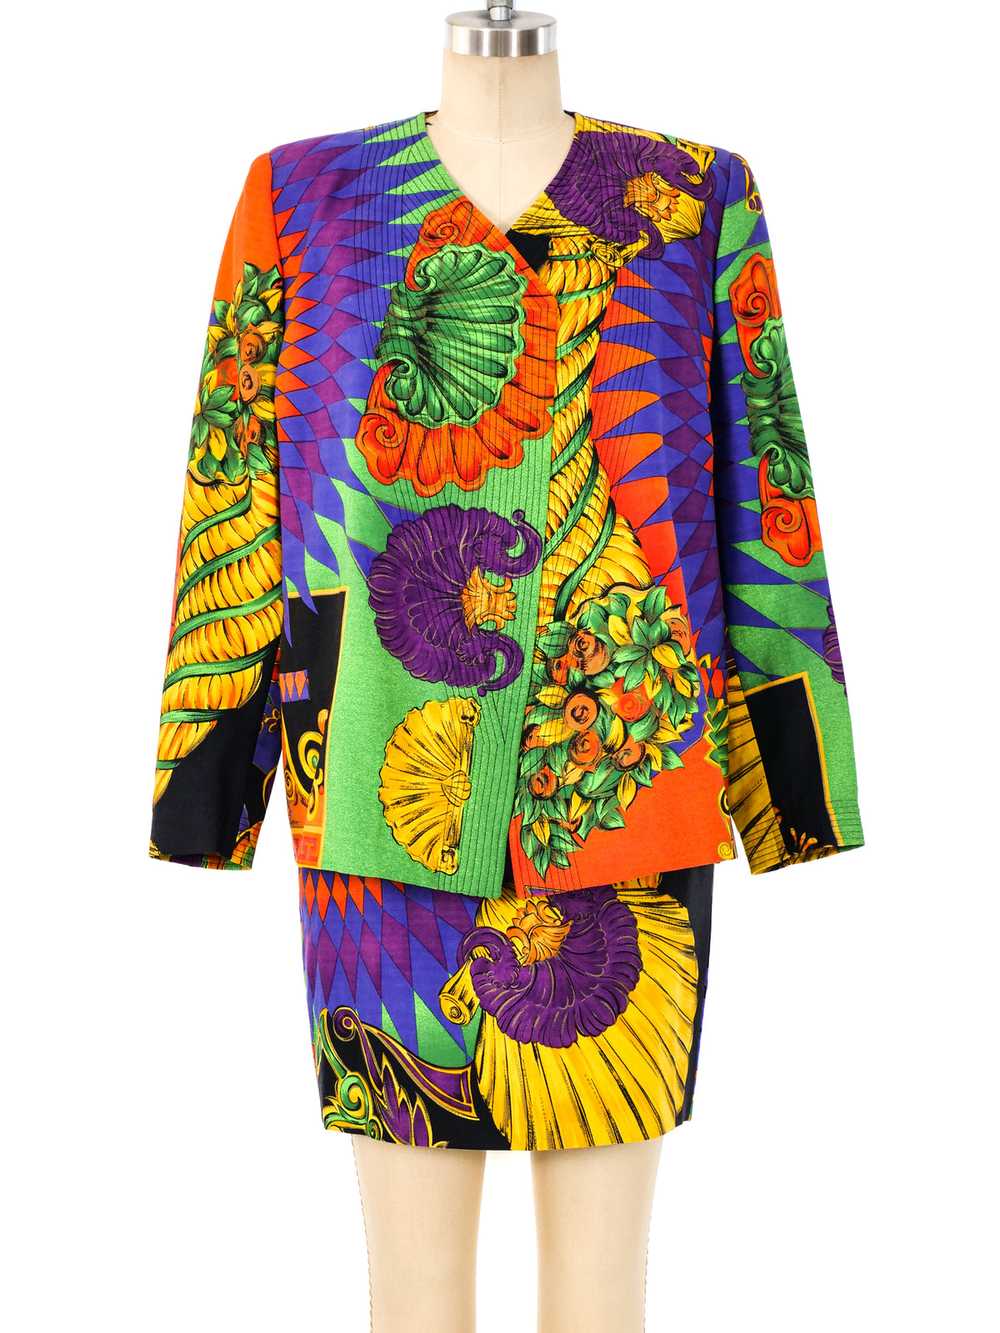 Gianni Versace Tropical Baroque Printed Skirt Suit - Gem